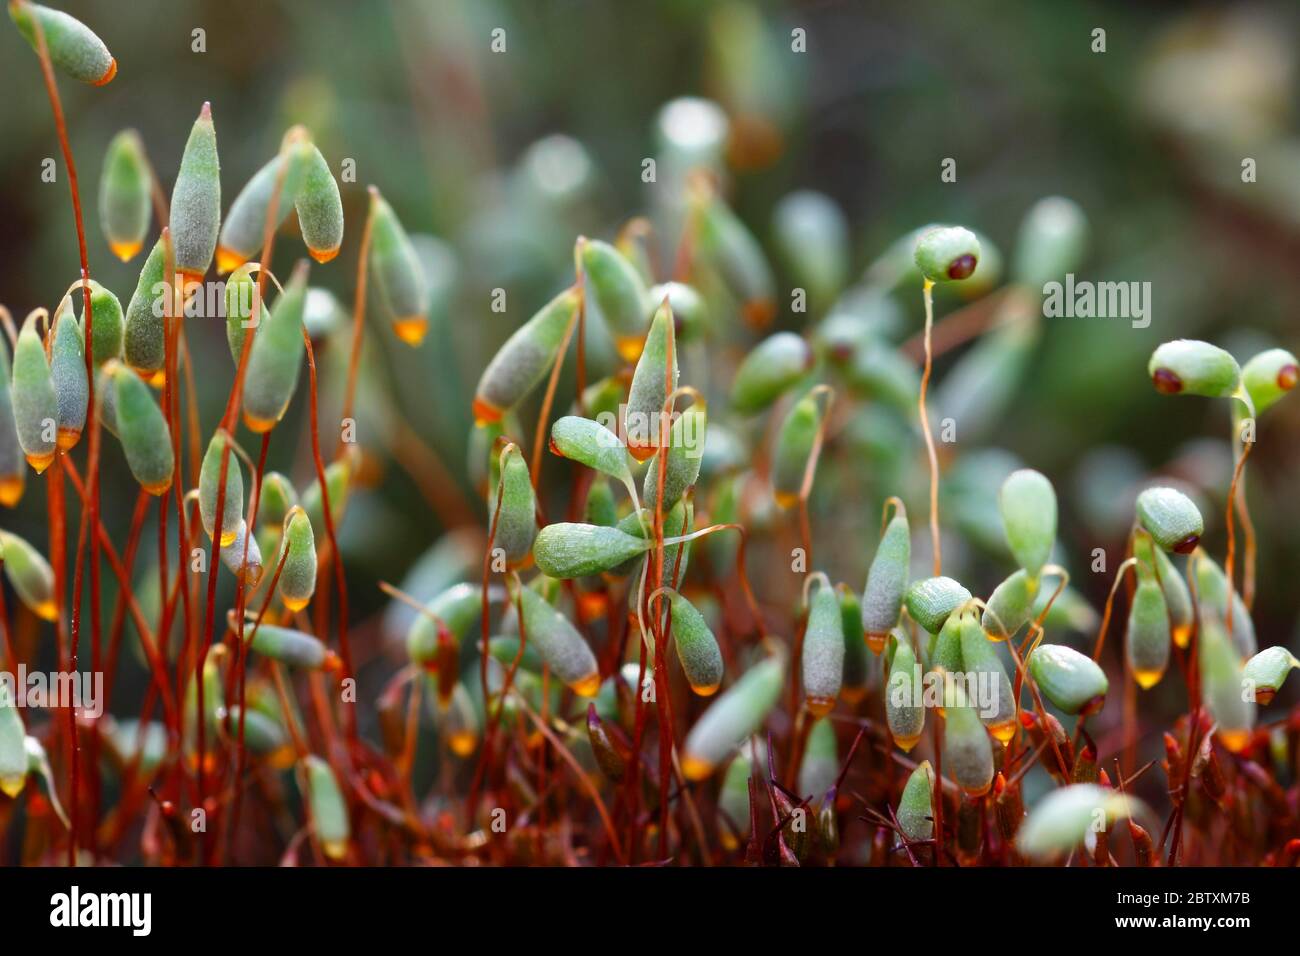 Common cord-moss (Funaria hygrometrica), Germany Stock Photo